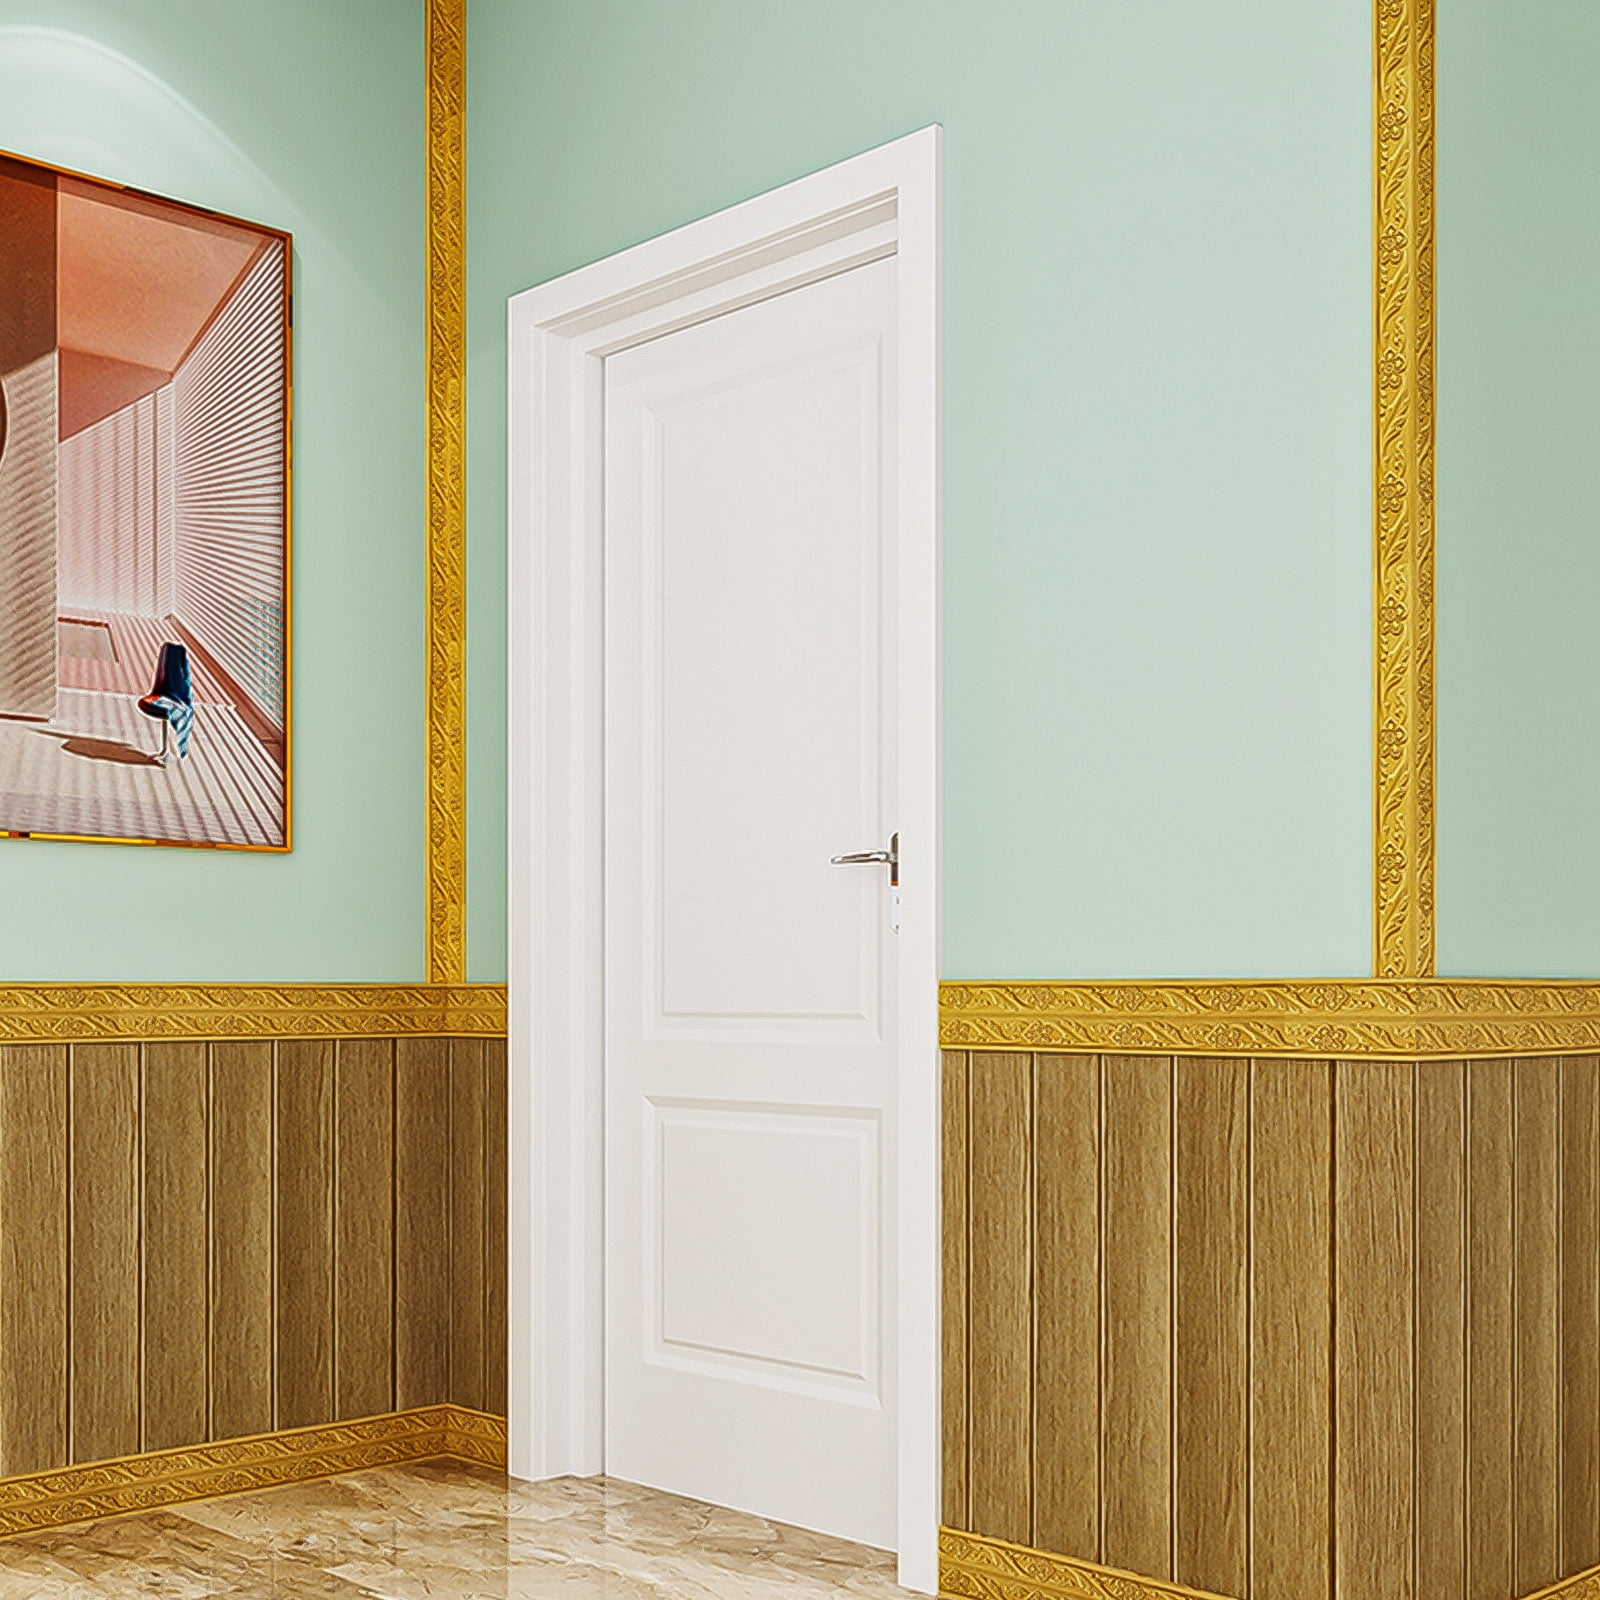 neukids Wallpaper Trim Wall Borders Frame for Bathroom Mirror